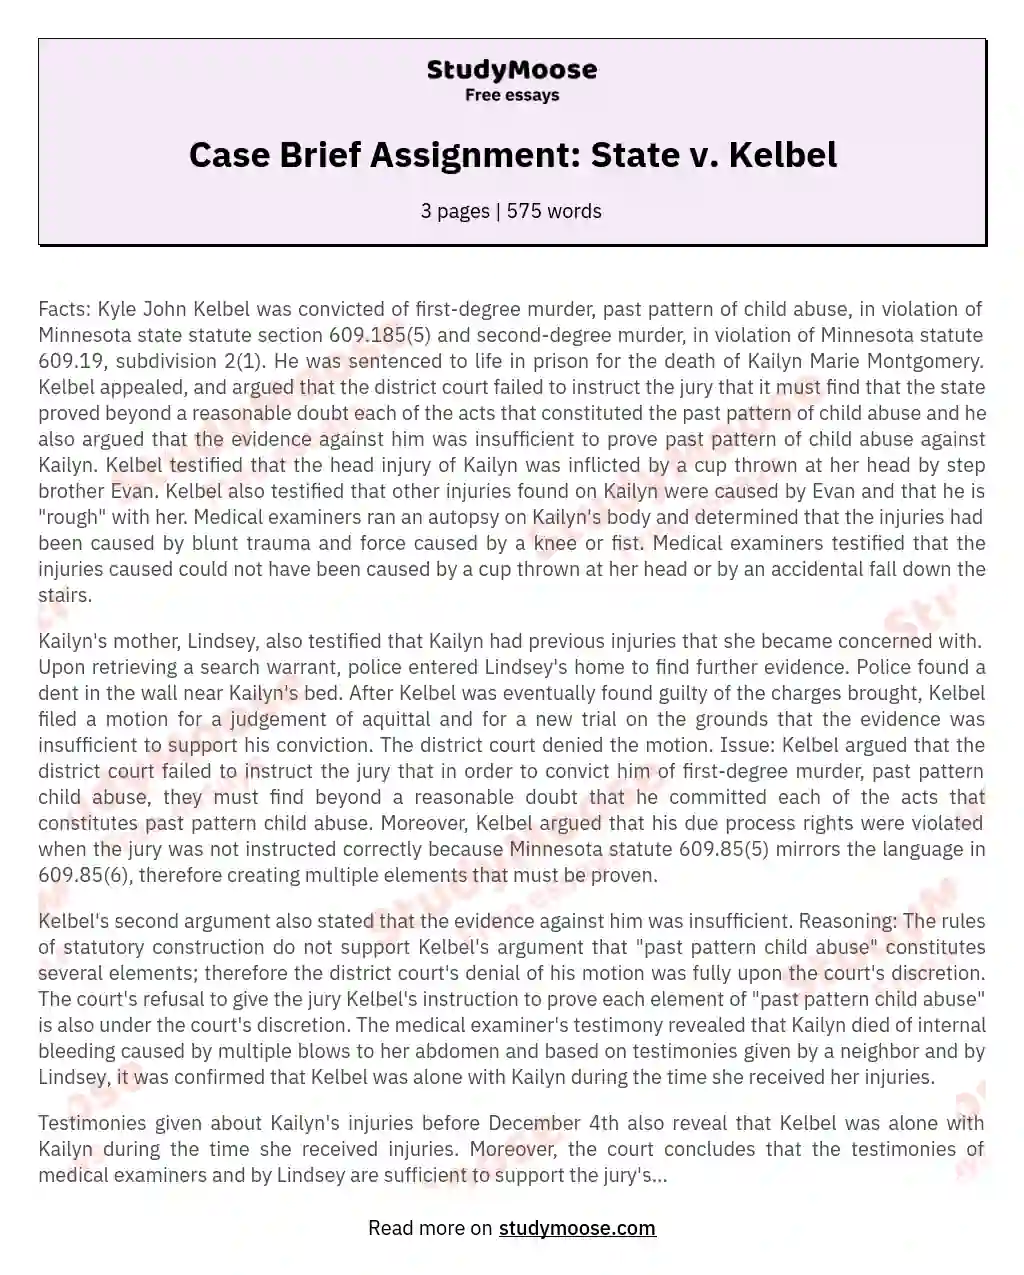 Case Brief Assignment: State v. Kelbel essay